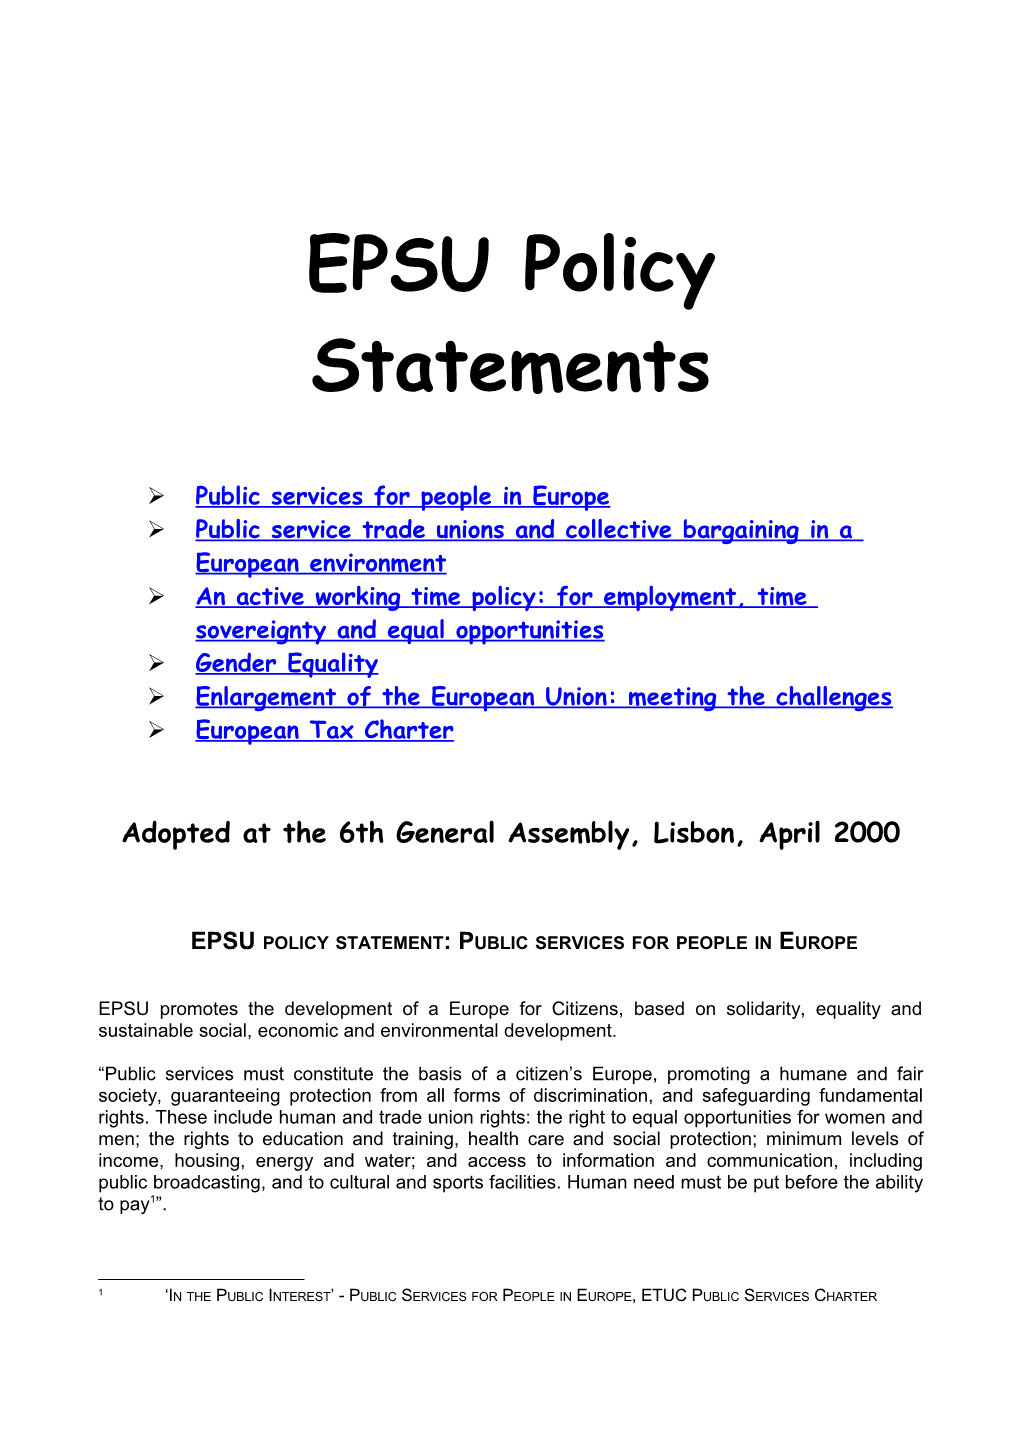 EPSU Policy Statements